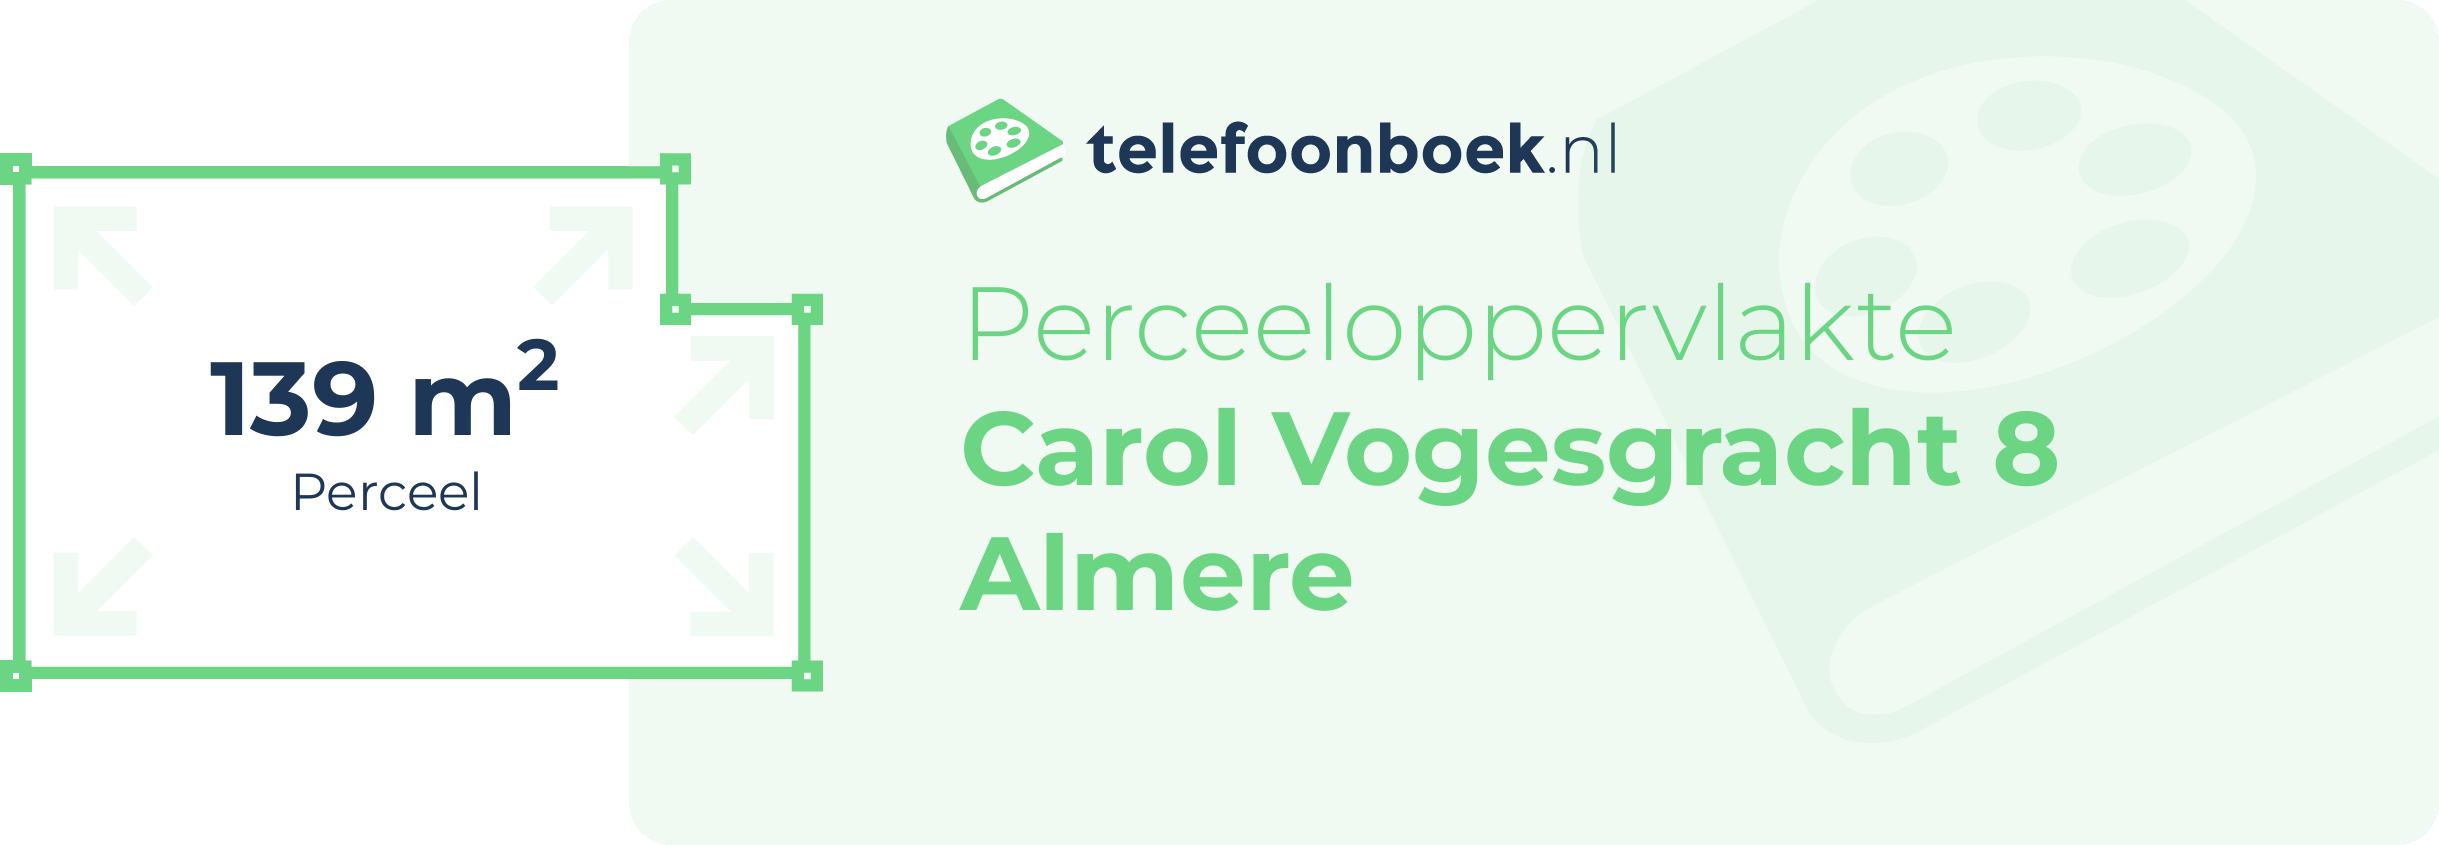 Perceeloppervlakte Carol Vogesgracht 8 Almere